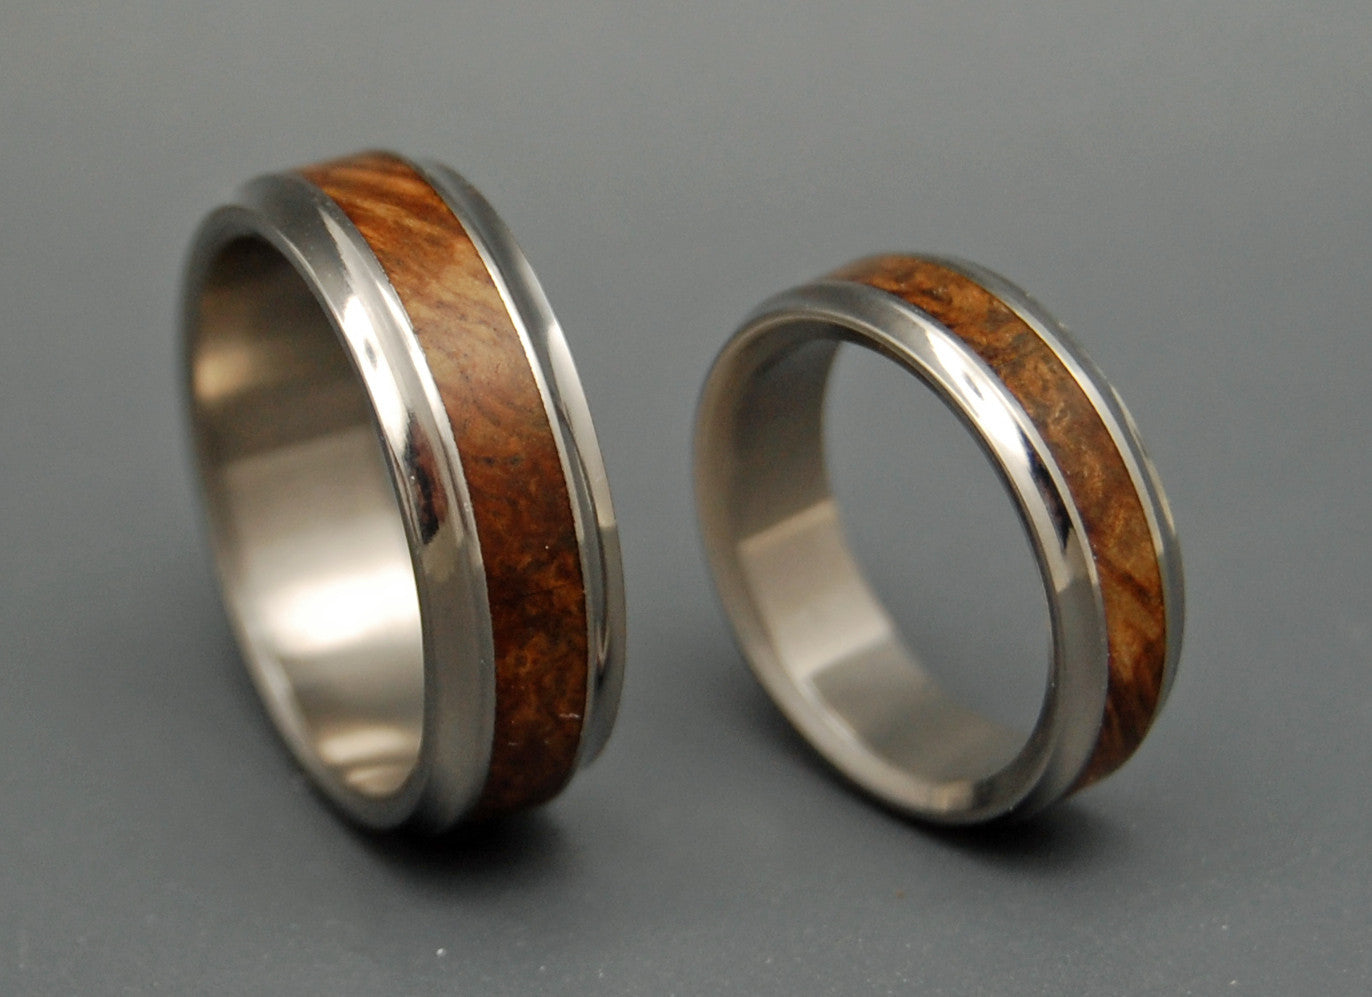 Windham | Wooden Wedding Ring Set - Minter and Richter Designs